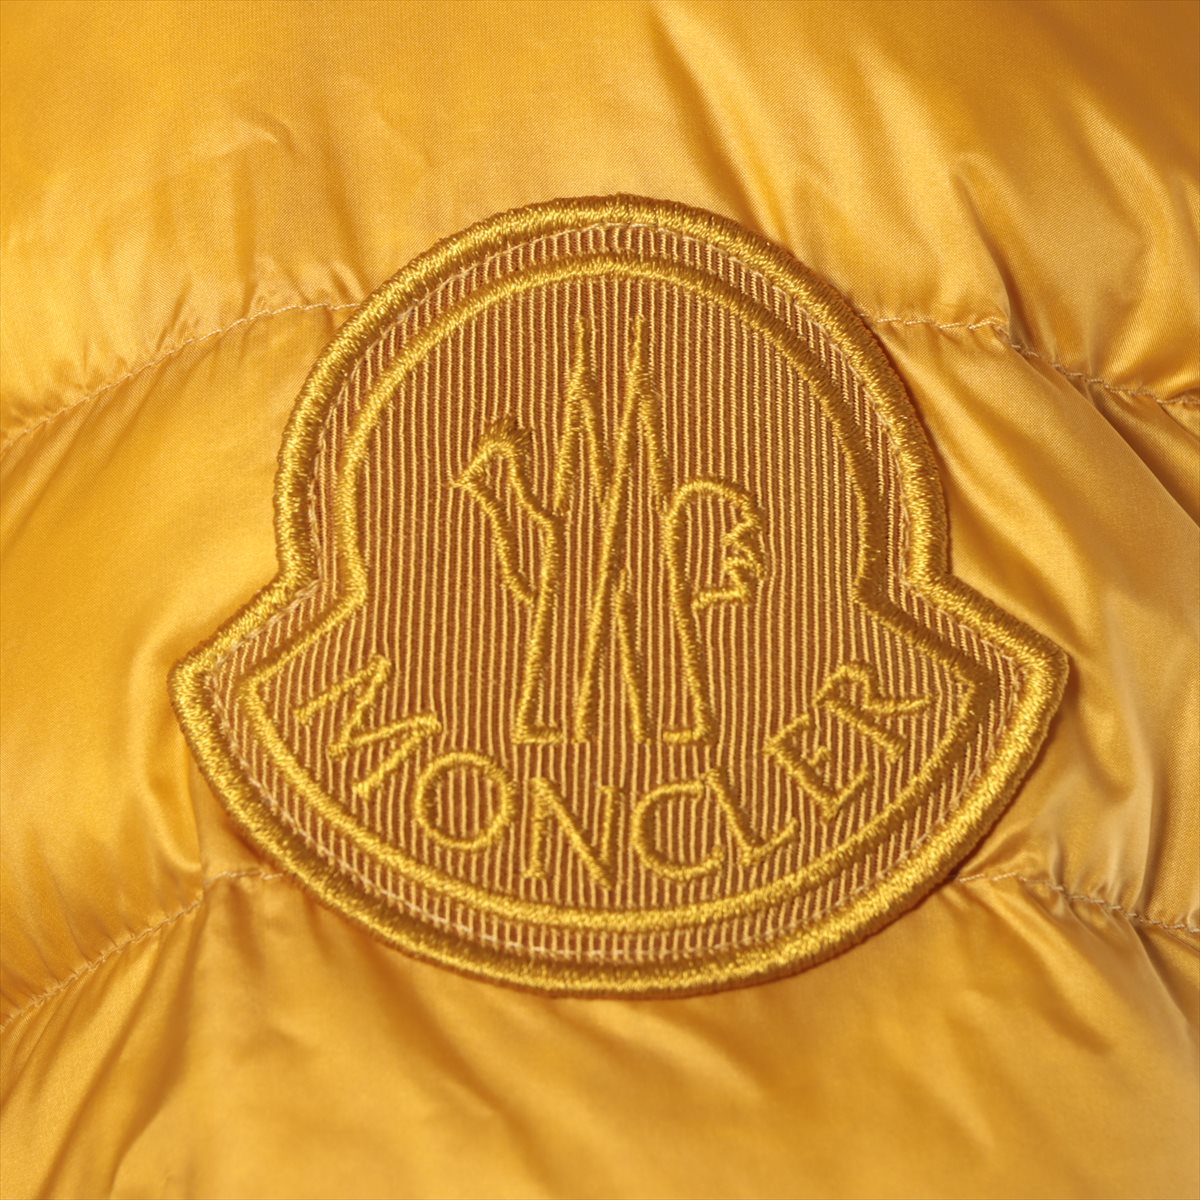 Moncler ABRICOT 20 years Nylon Down jacket 3 Ladies' Yellow